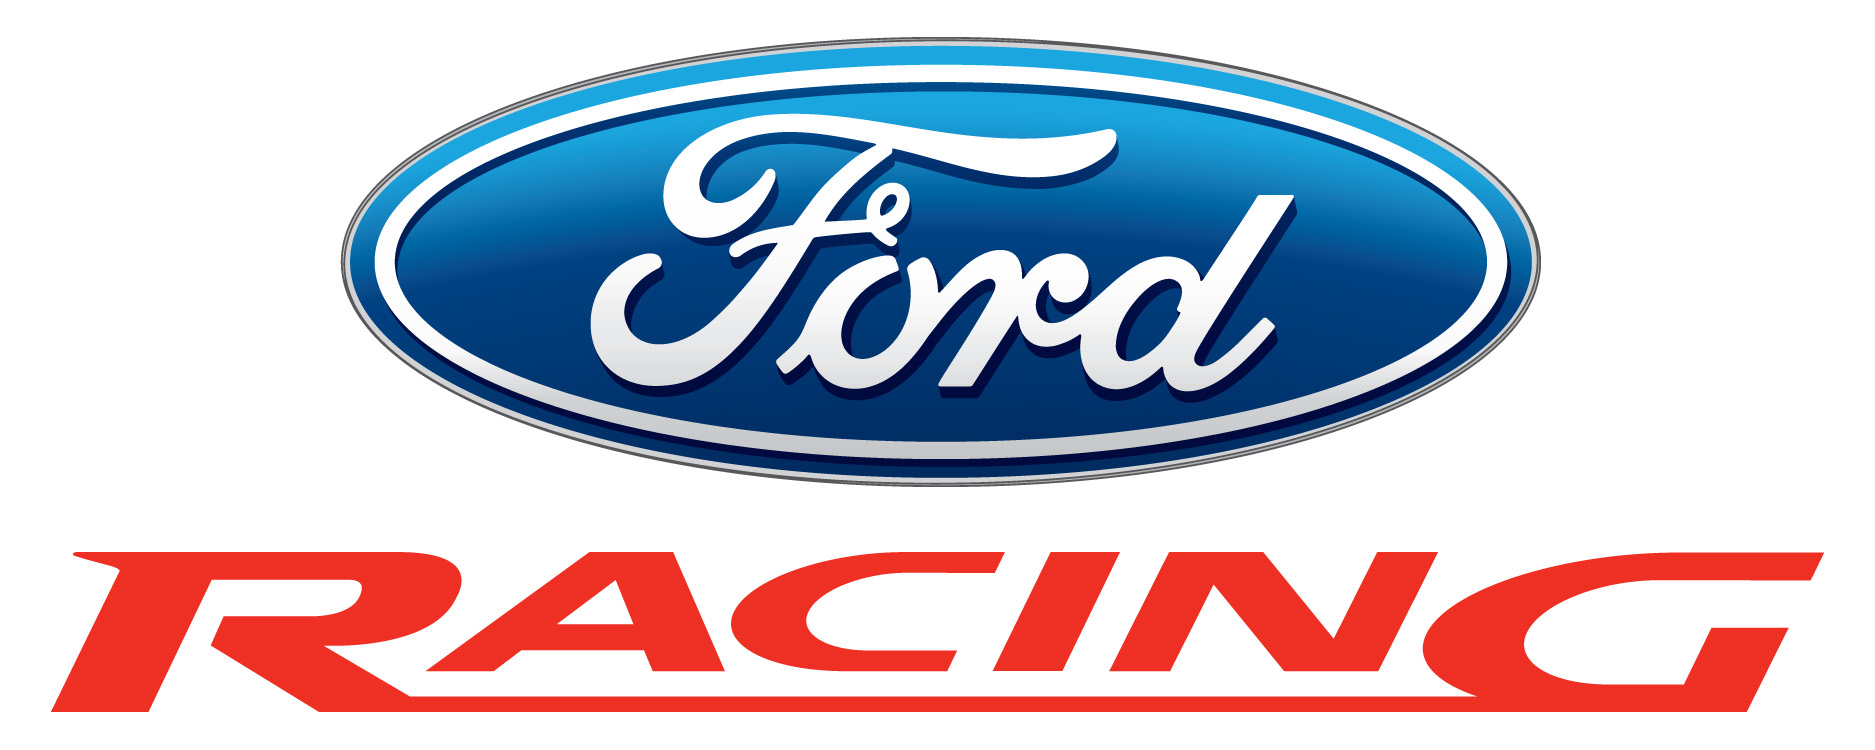 Ford racing wallpaper